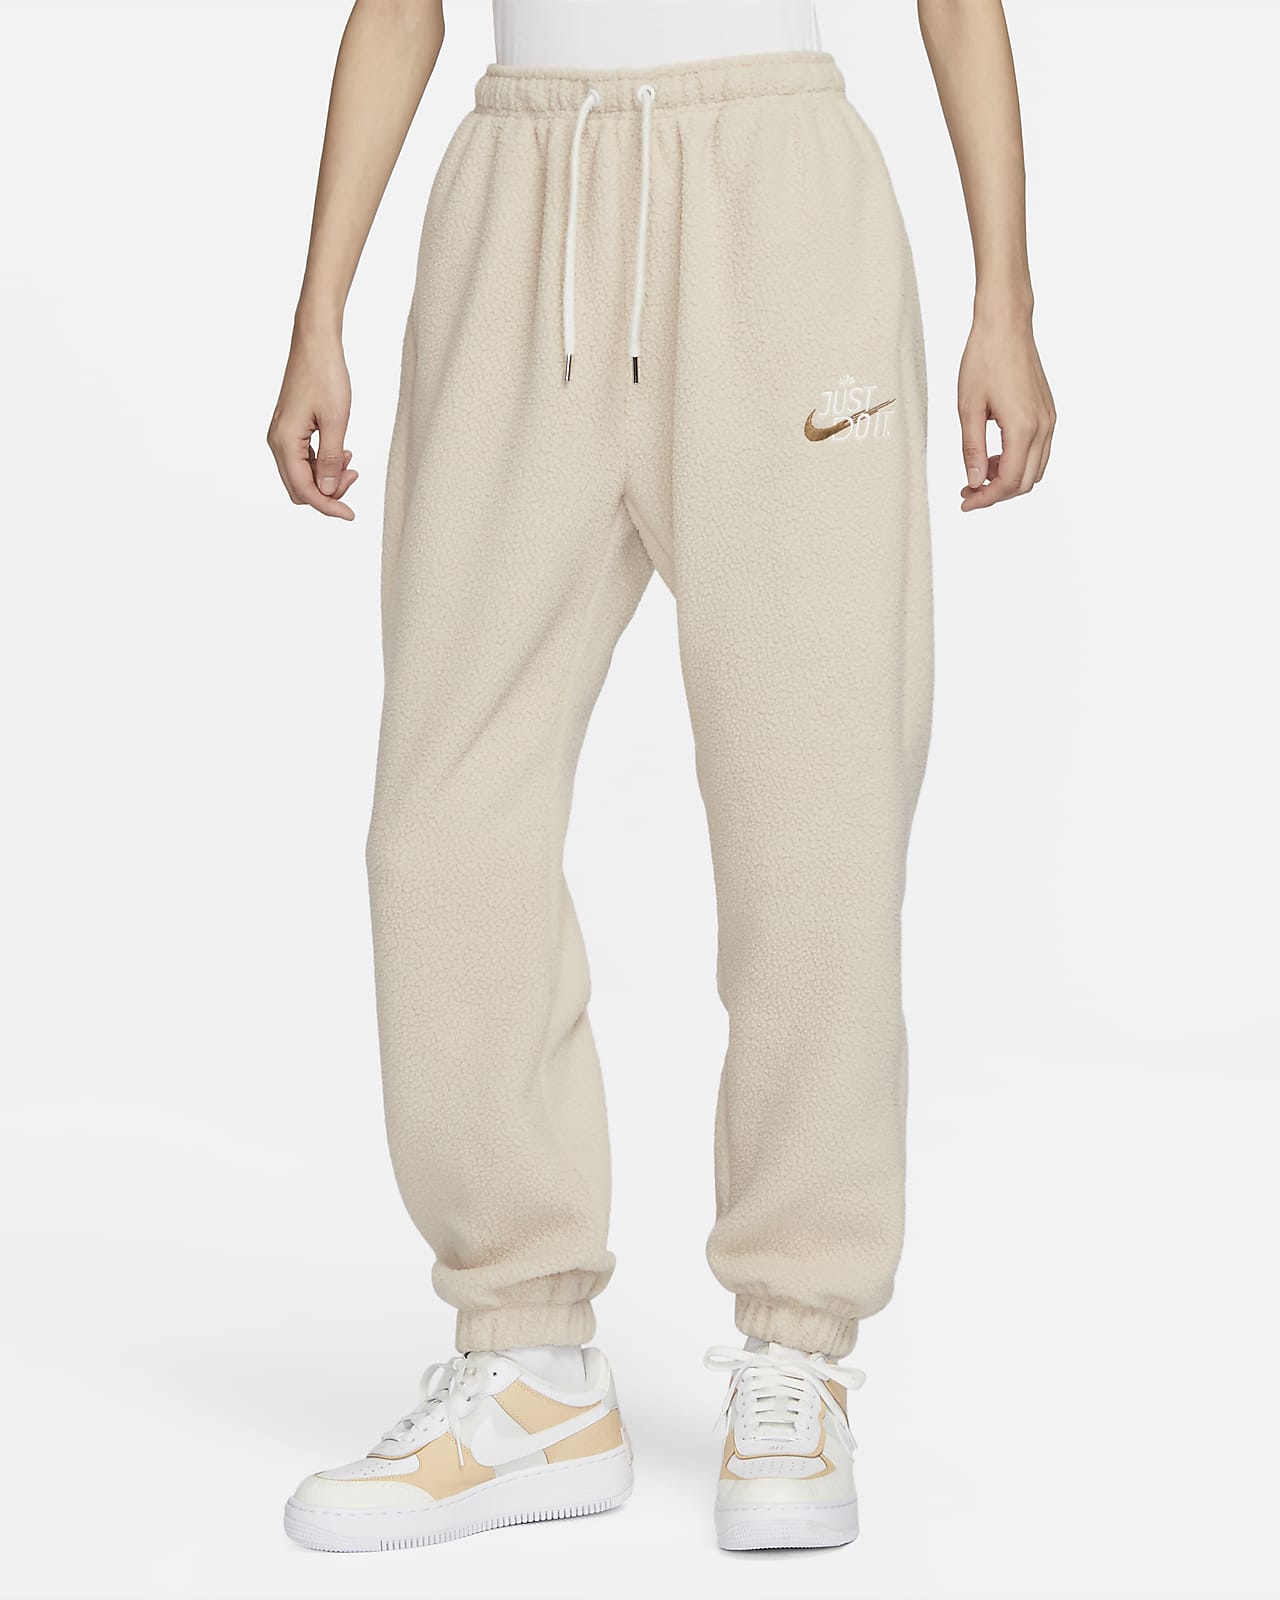 Nike Sportswear Plush 女子长裤